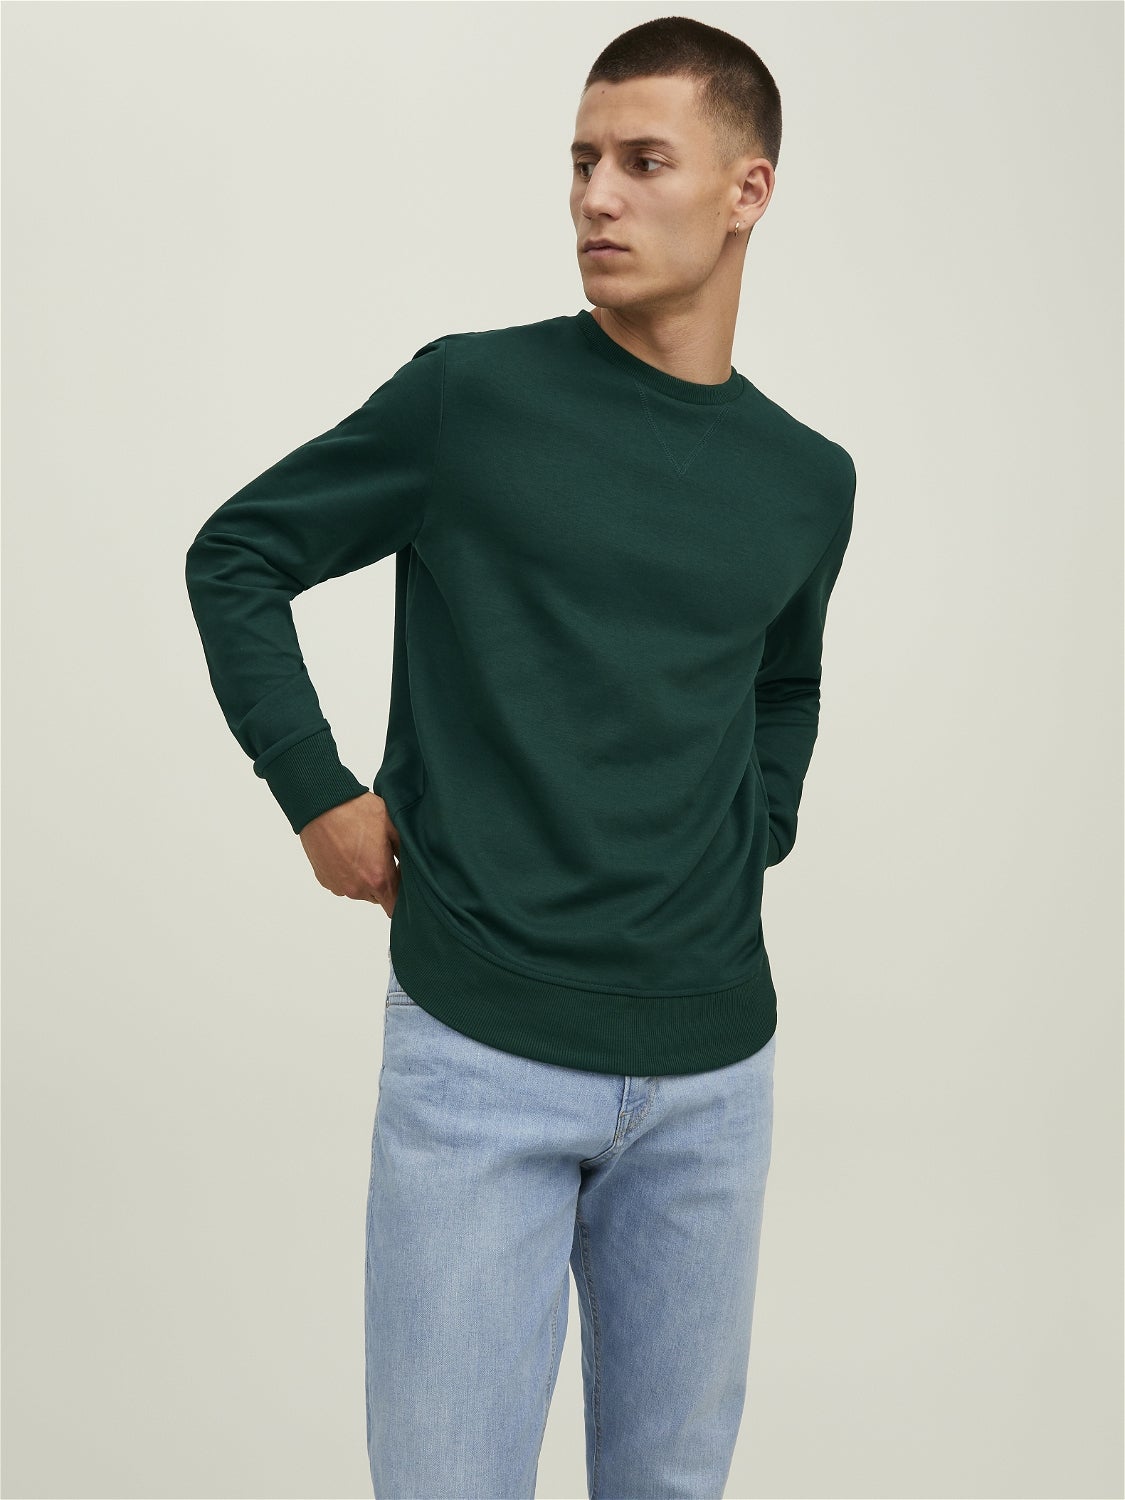 discount 56% Jack & Jones sweatshirt MEN FASHION Jumpers & Sweatshirts Hoodless Green L 